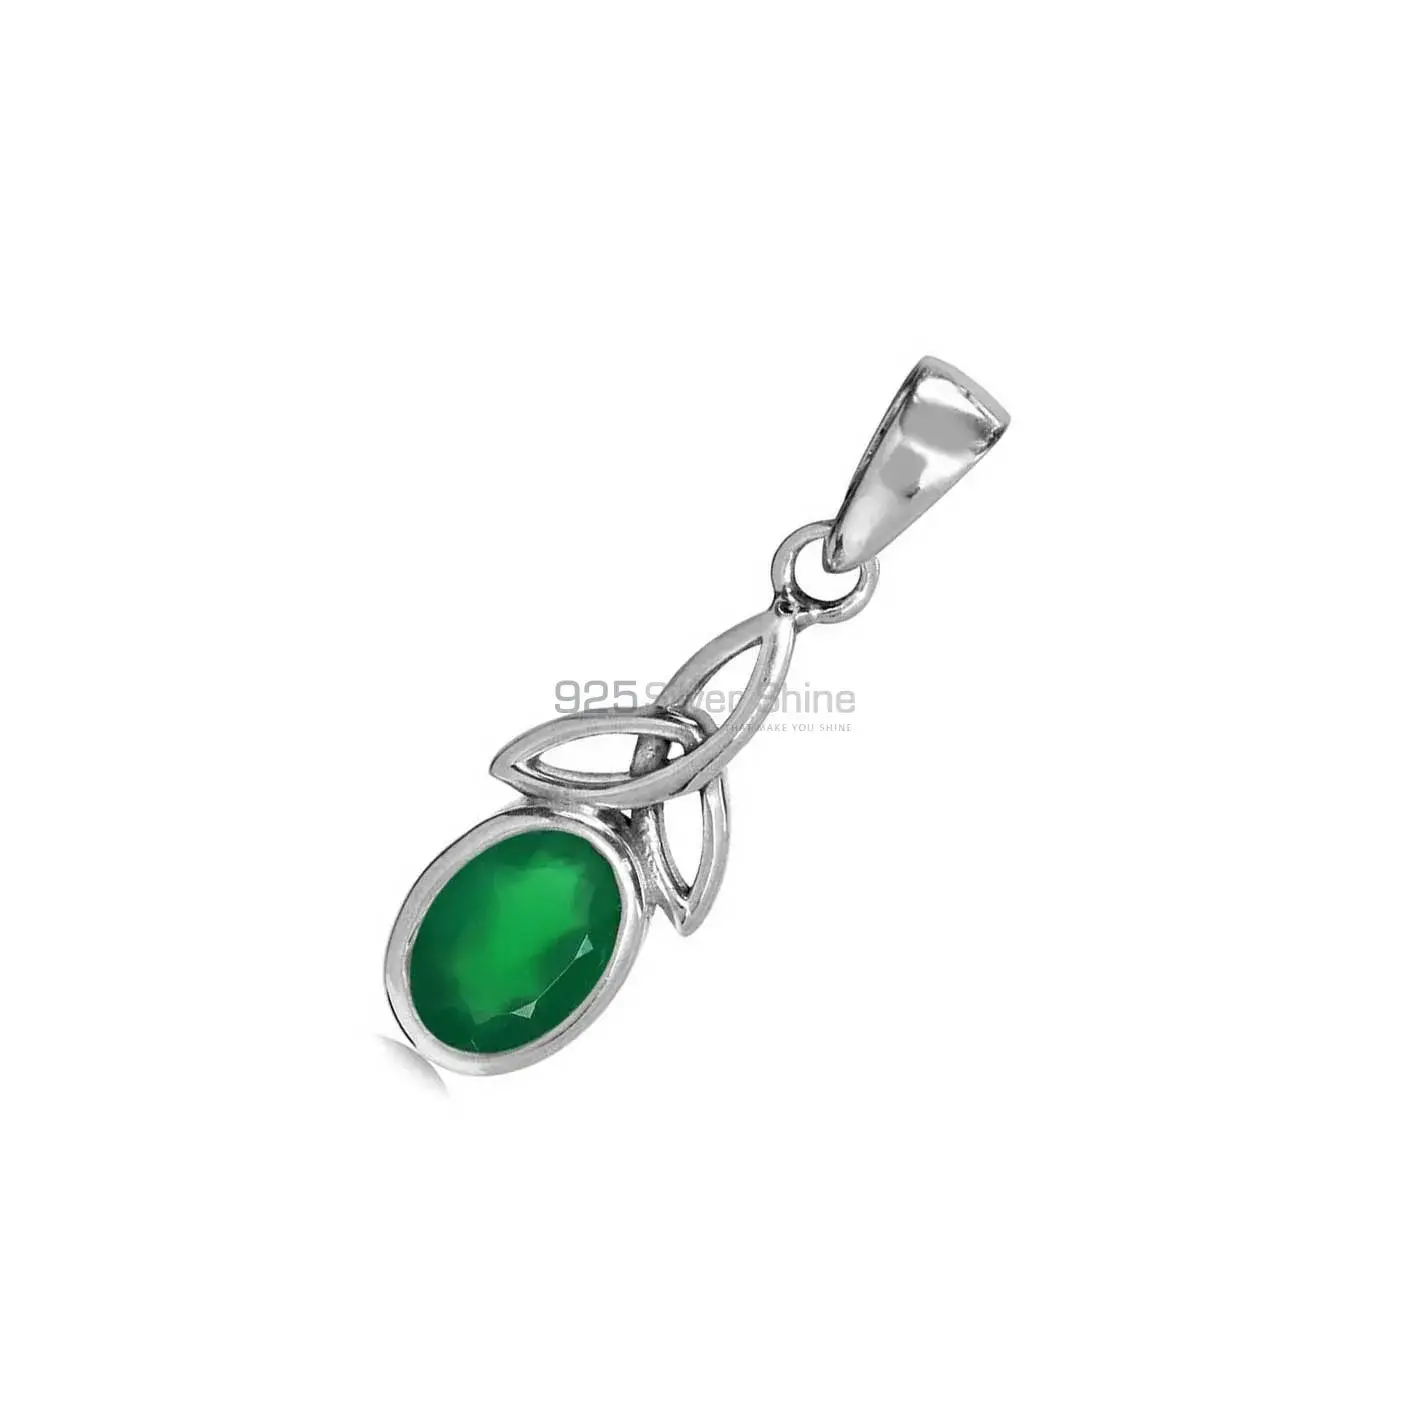 Wholesale Solid Sterling Silver Handmade Pendants In Green Onyx Gemstone Jewelry 925SP06-1_0